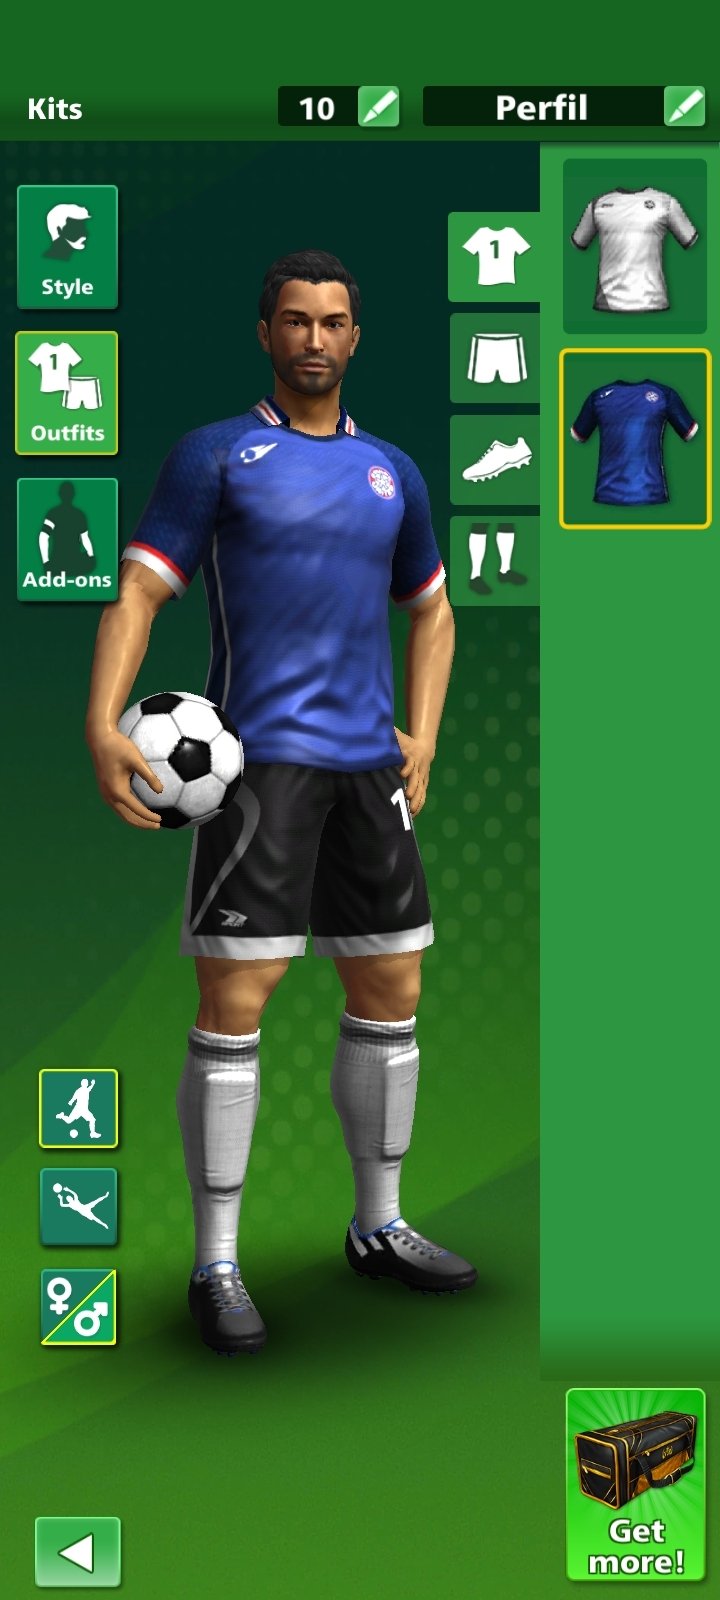 Football Strike - Perfect Kick for mac download free